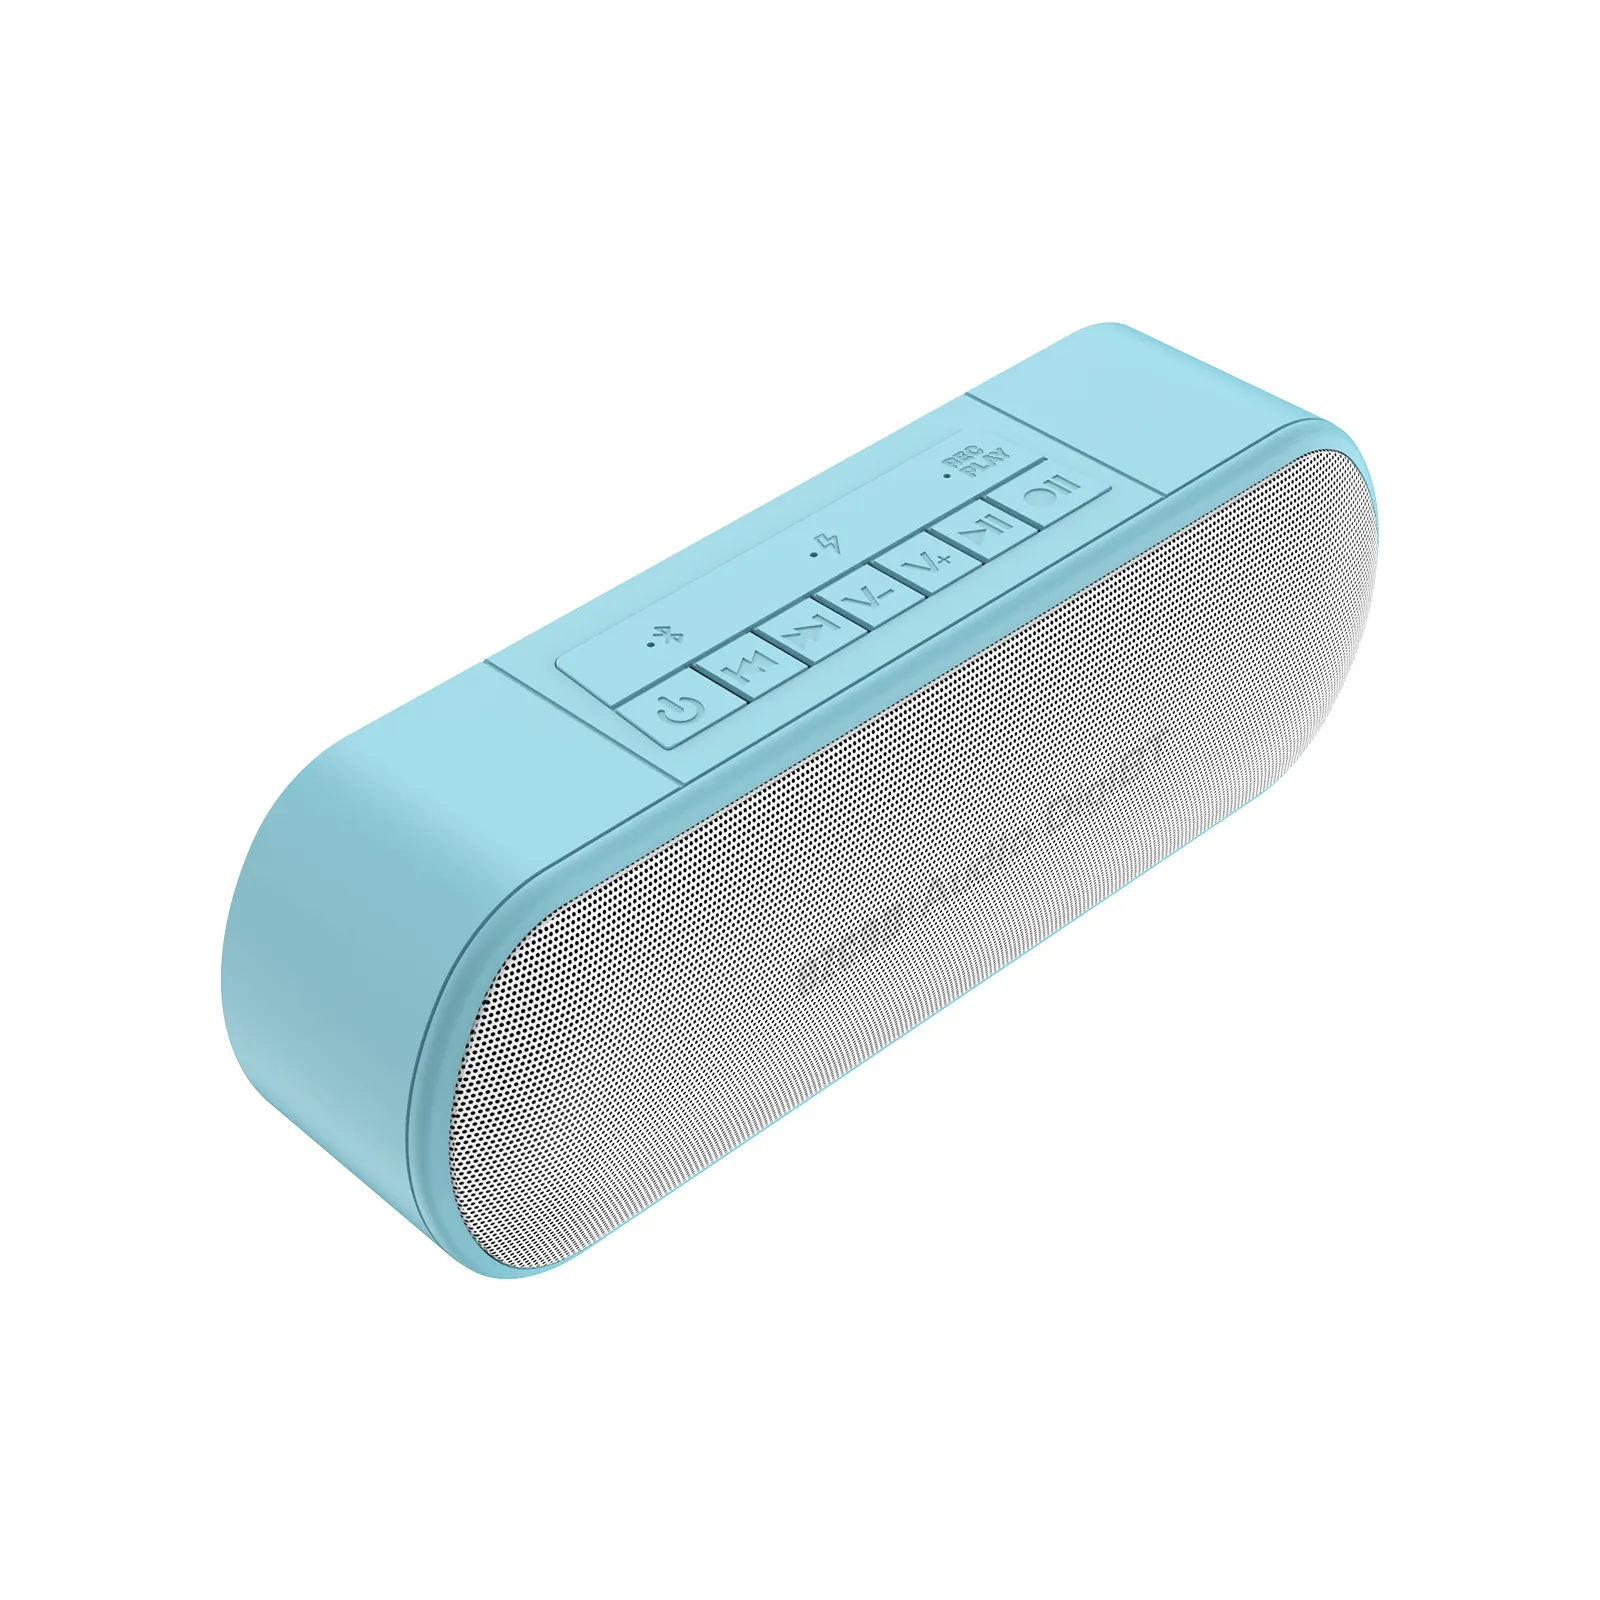 Recorder Perekam Bluetooth Speaker Audio Ke MP3 Digitizer Pemutaran Perekam Audio